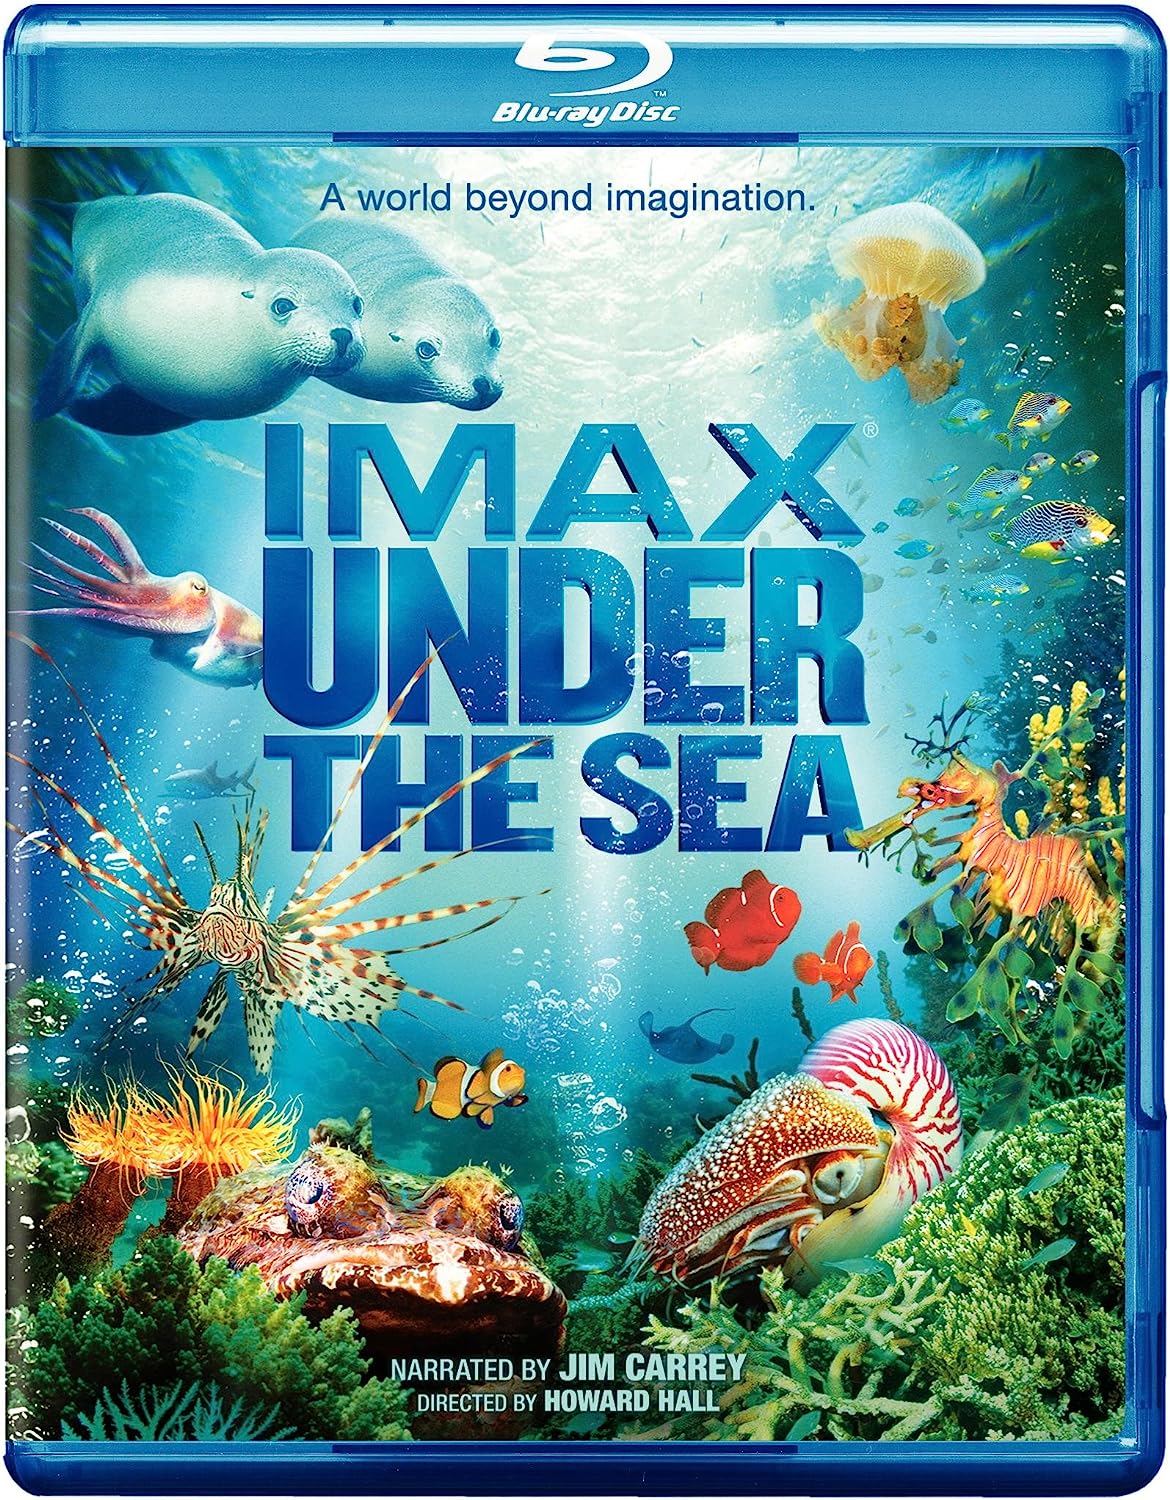 Imax: Under the Sea Blu-ray DVD 3D